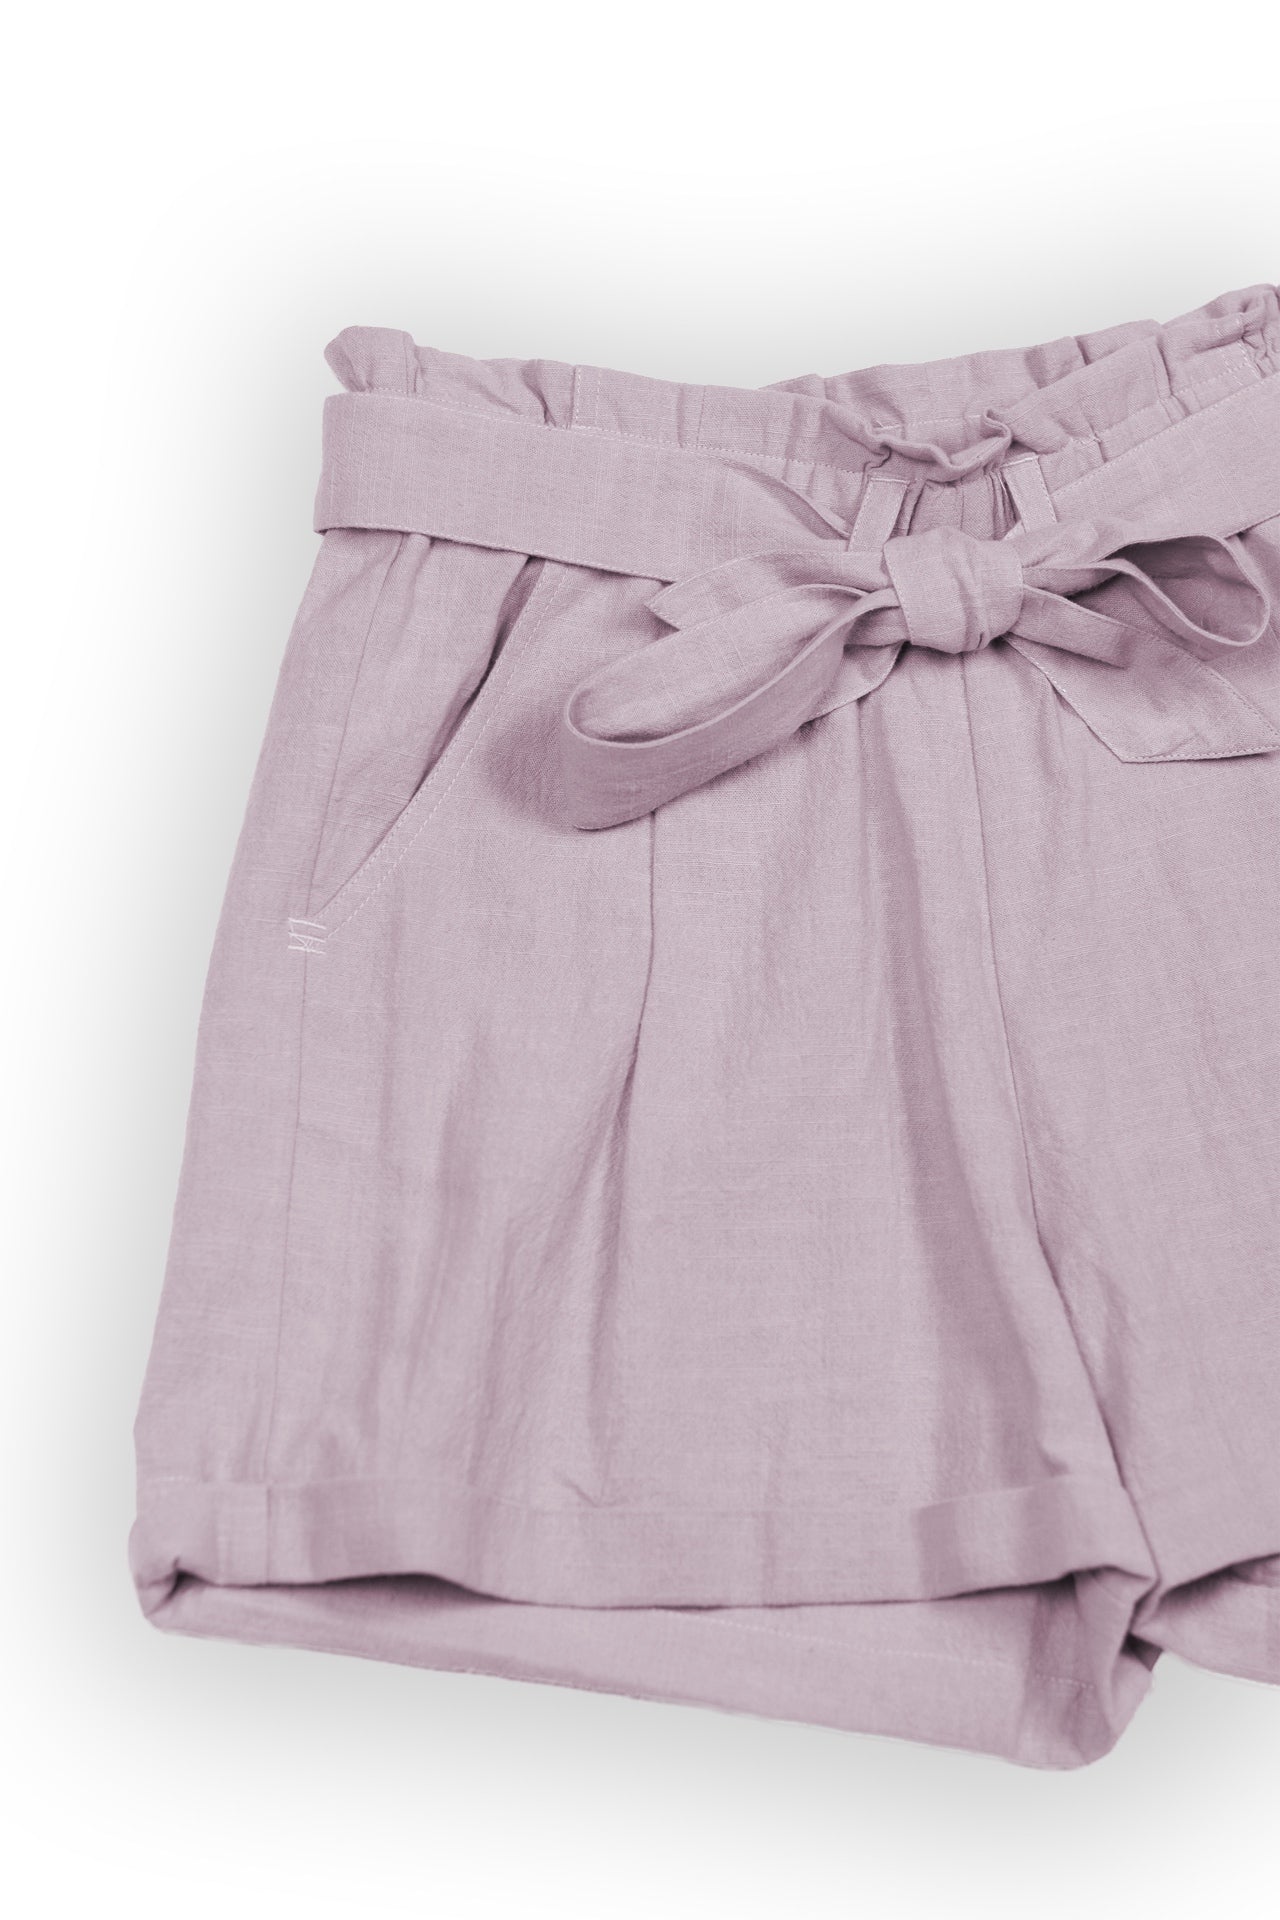 Mabel Mauve Paperbag Waist Shorts - Rupert and Buckley - Shorts